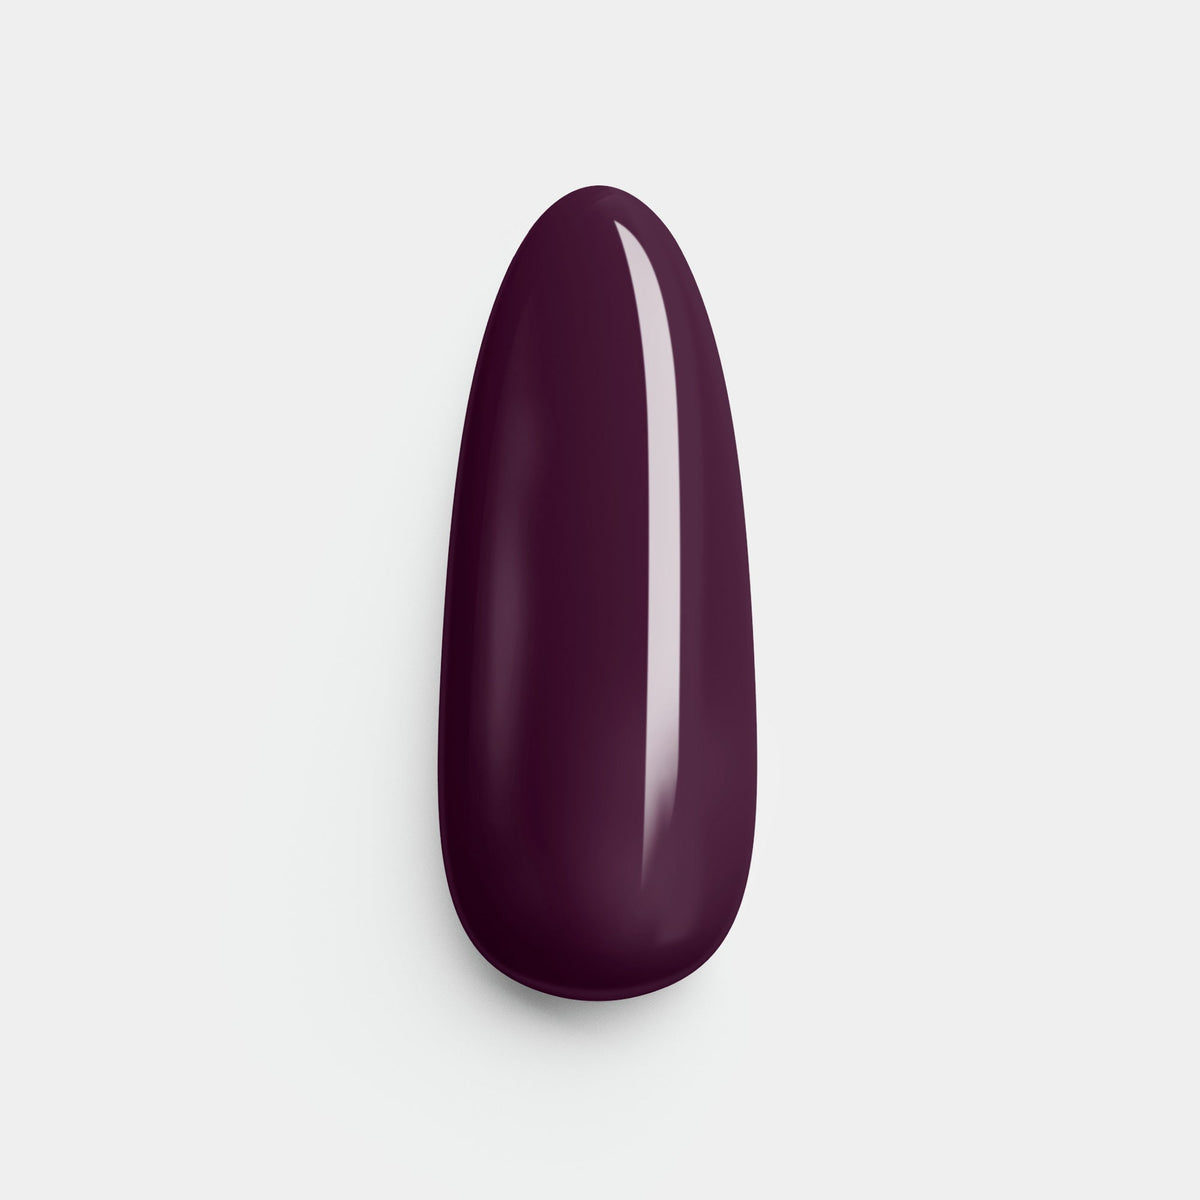 Gelous Vampy Purple gel nail polish swatch - photographed in Australia